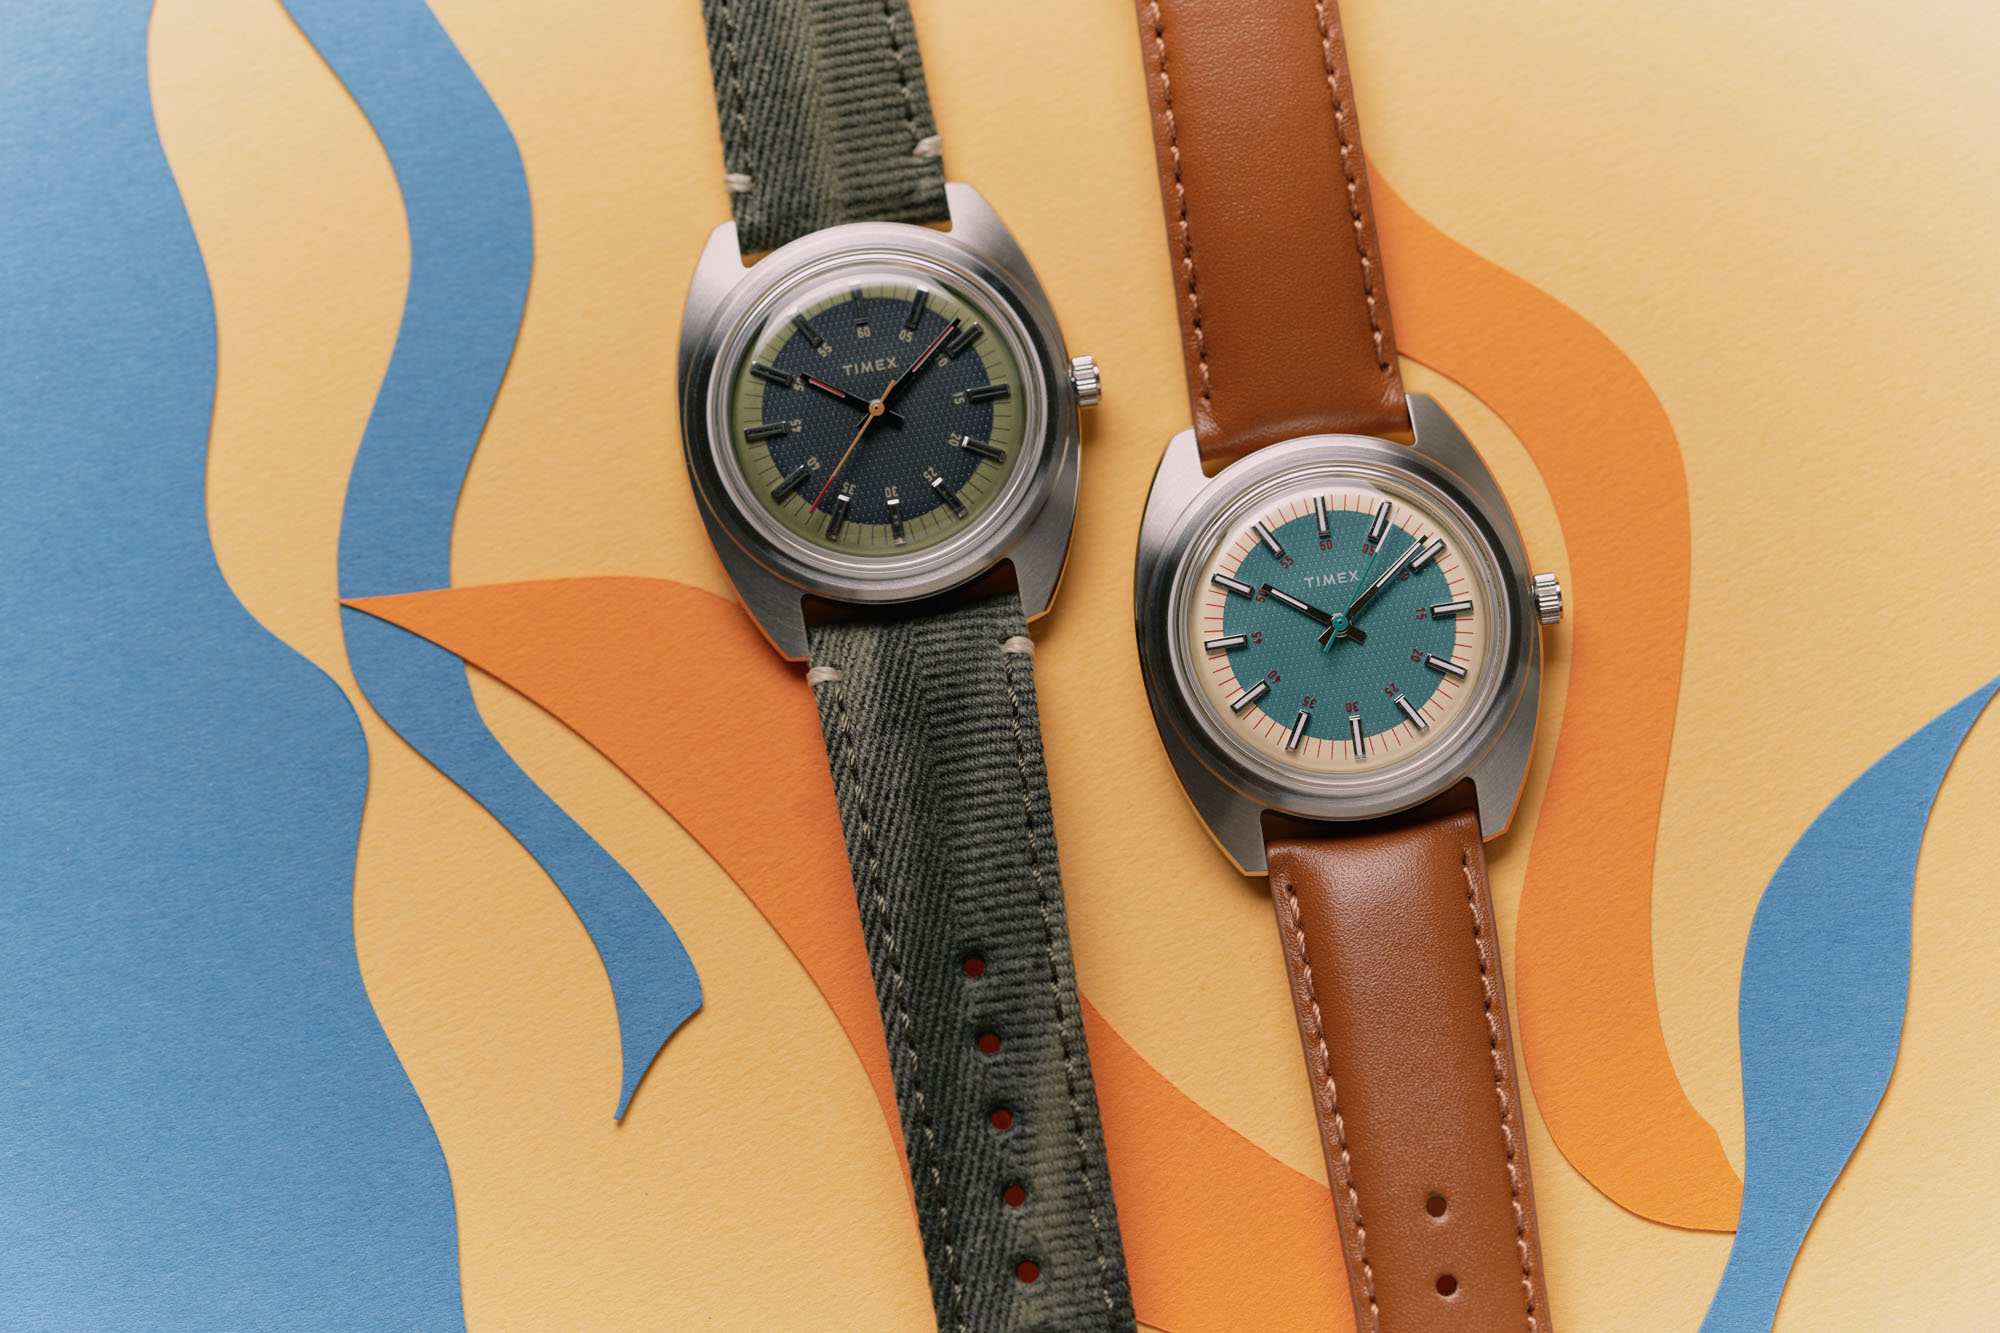 Timex x Worn & Wound представляет часы ограниченной серии WW75